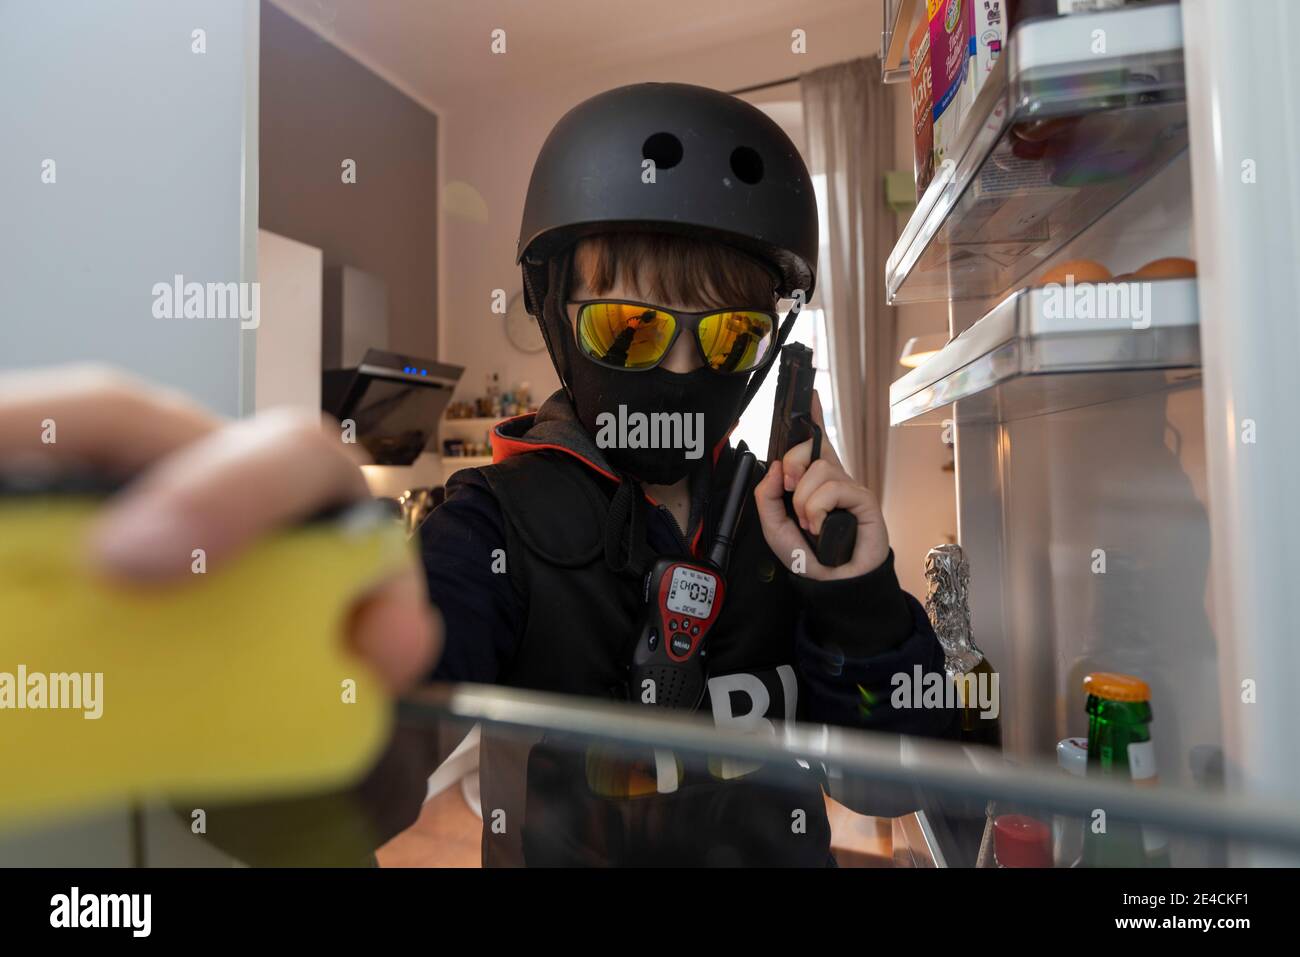 Boy in helmet, sunglasses and FBI shirt cleans the fridge Stock Photo